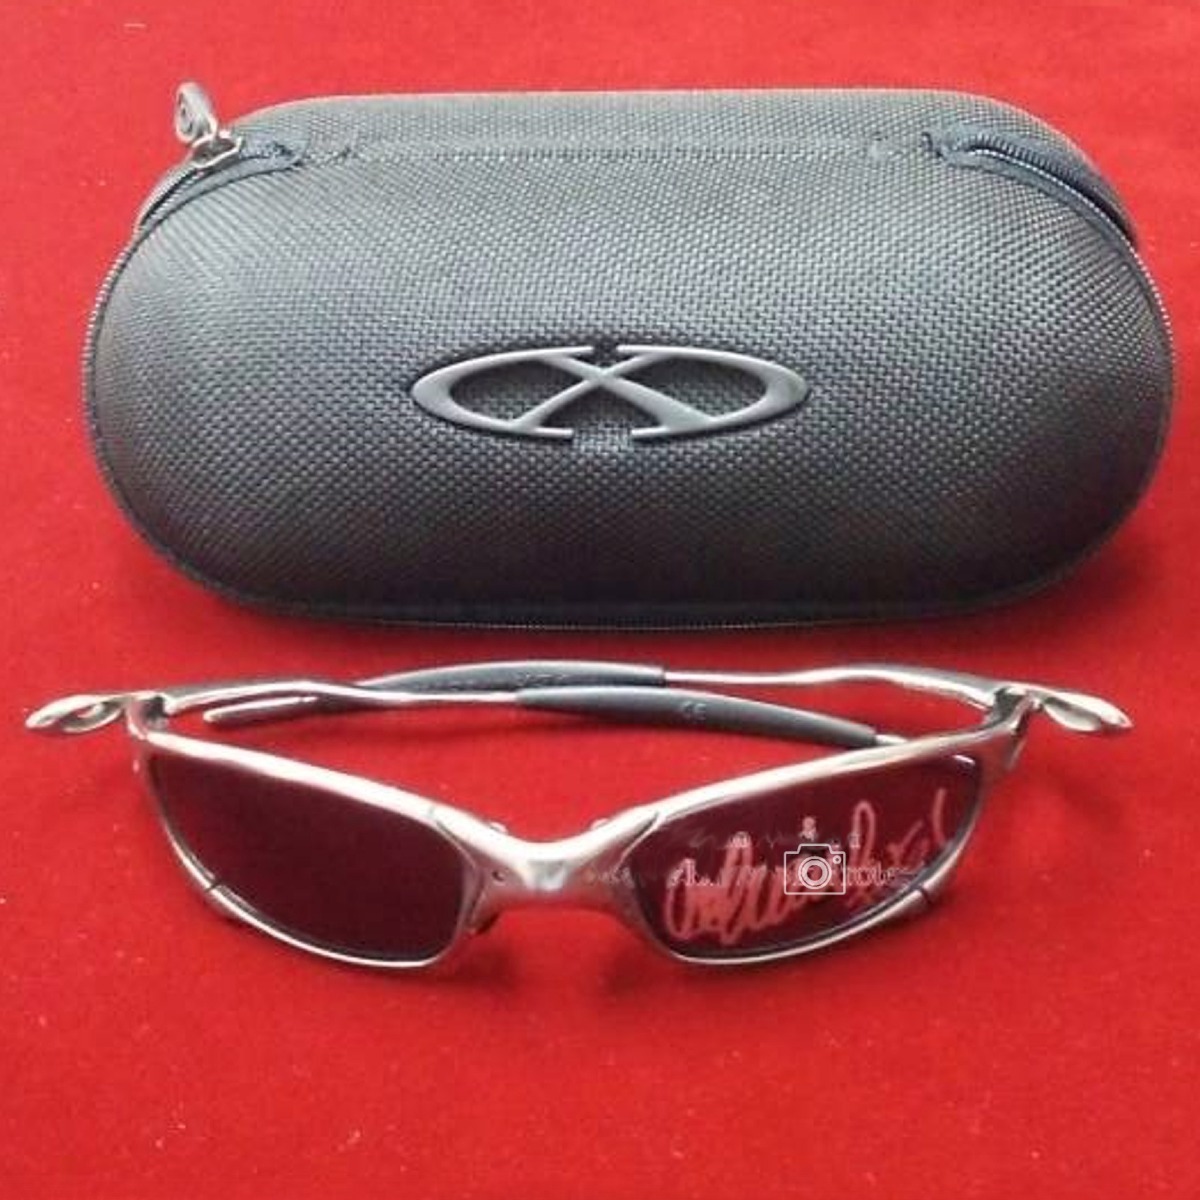 #USED[Auto Sunglasses]ICHIRO actual use Oakley company manufactured Sunglasses Auto * search : Oacley company manufactured sunglasses with autograph large .